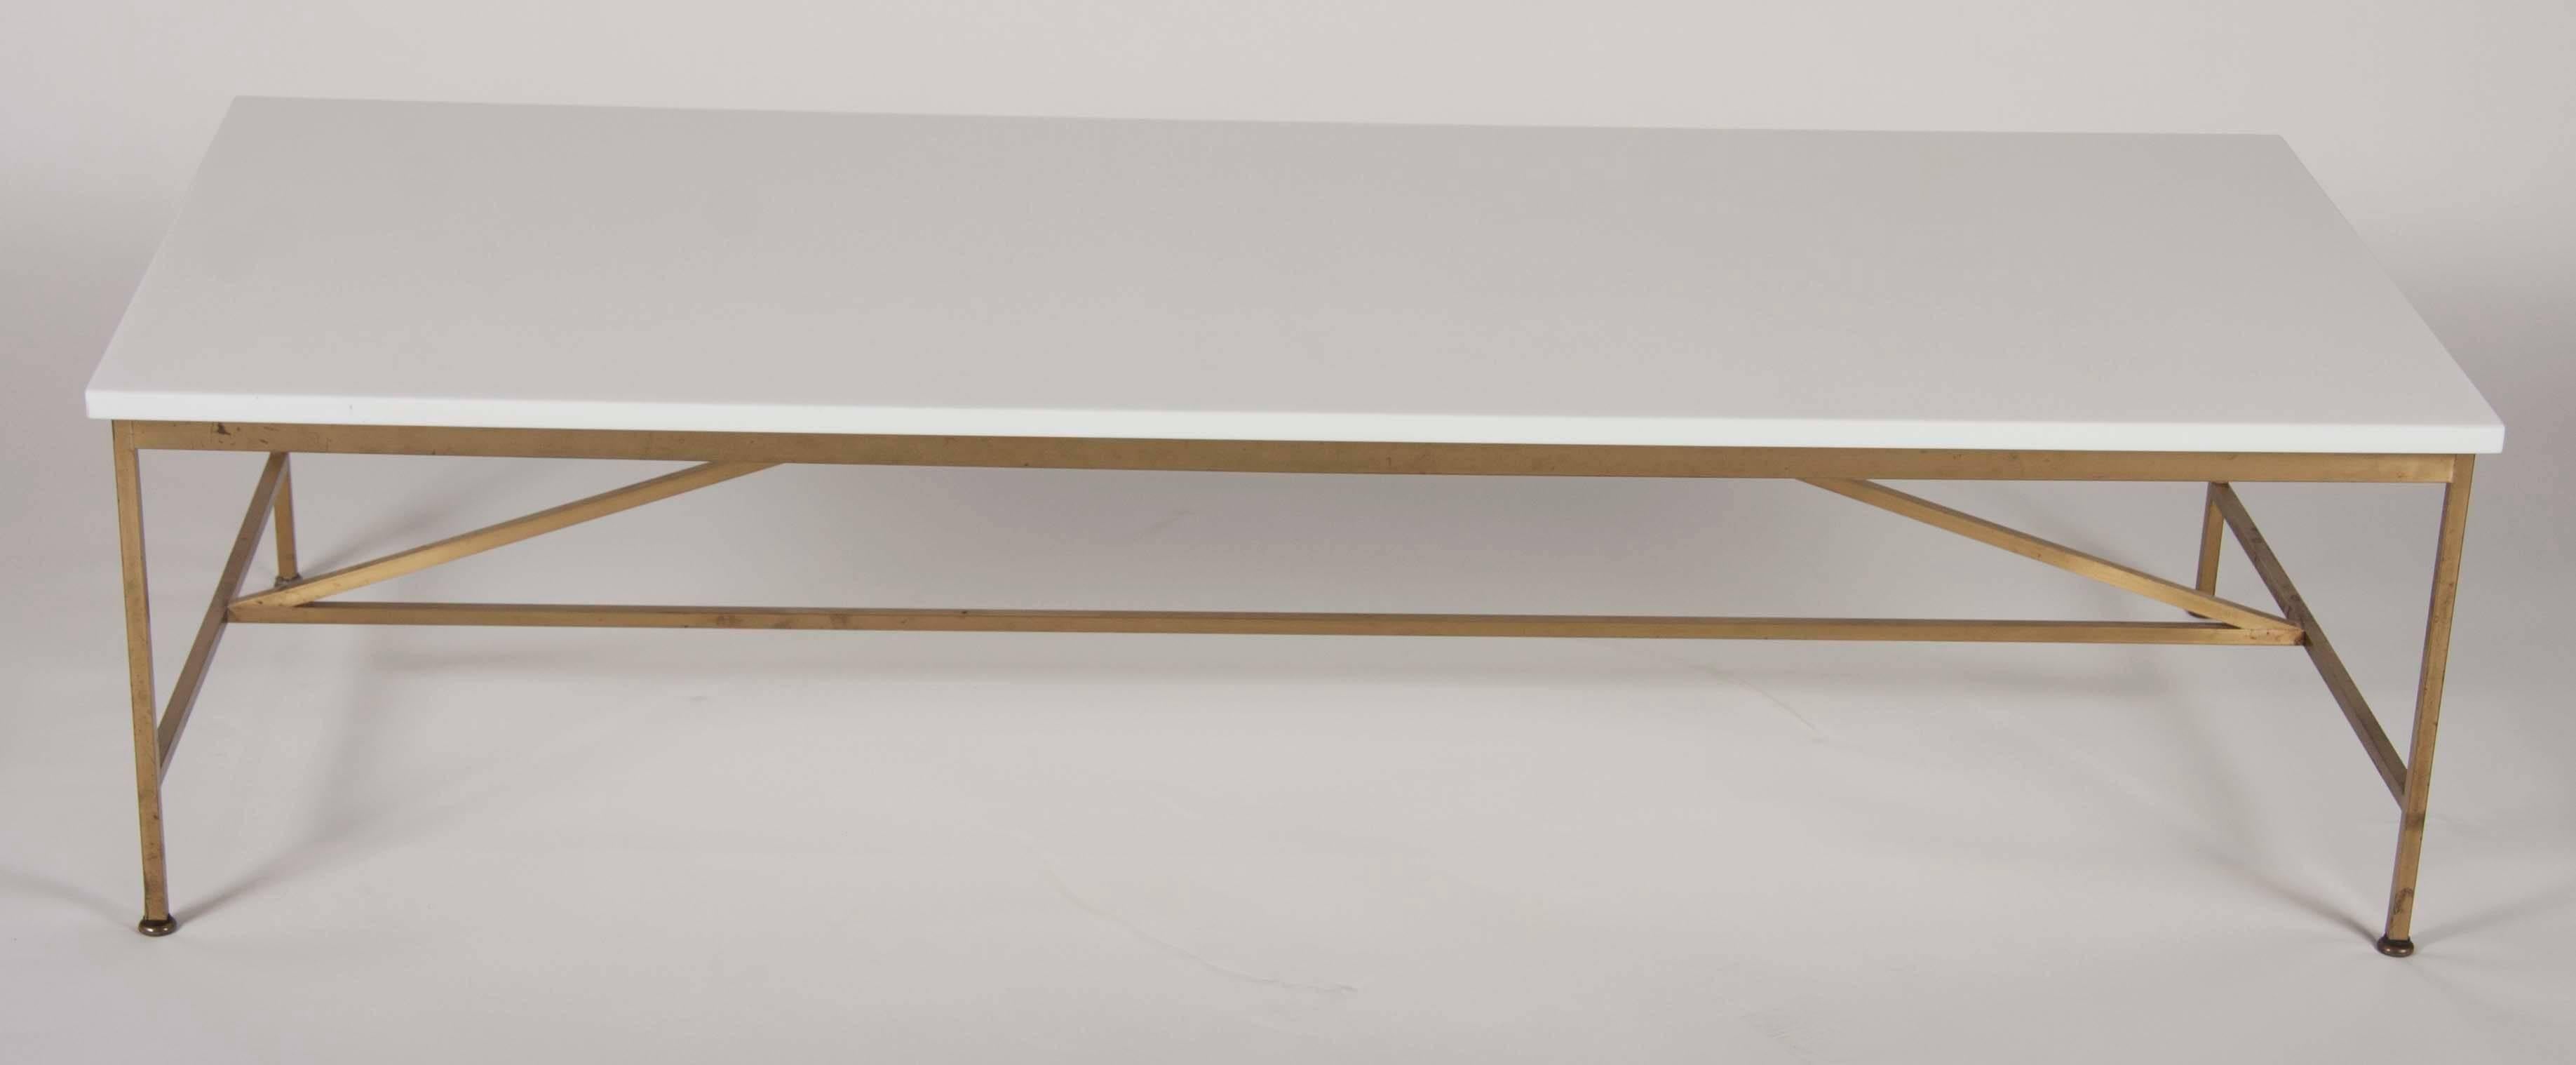 Metalwork Paul McCobb Brass Frame Coffee Table with White Vitrolite Glass Top